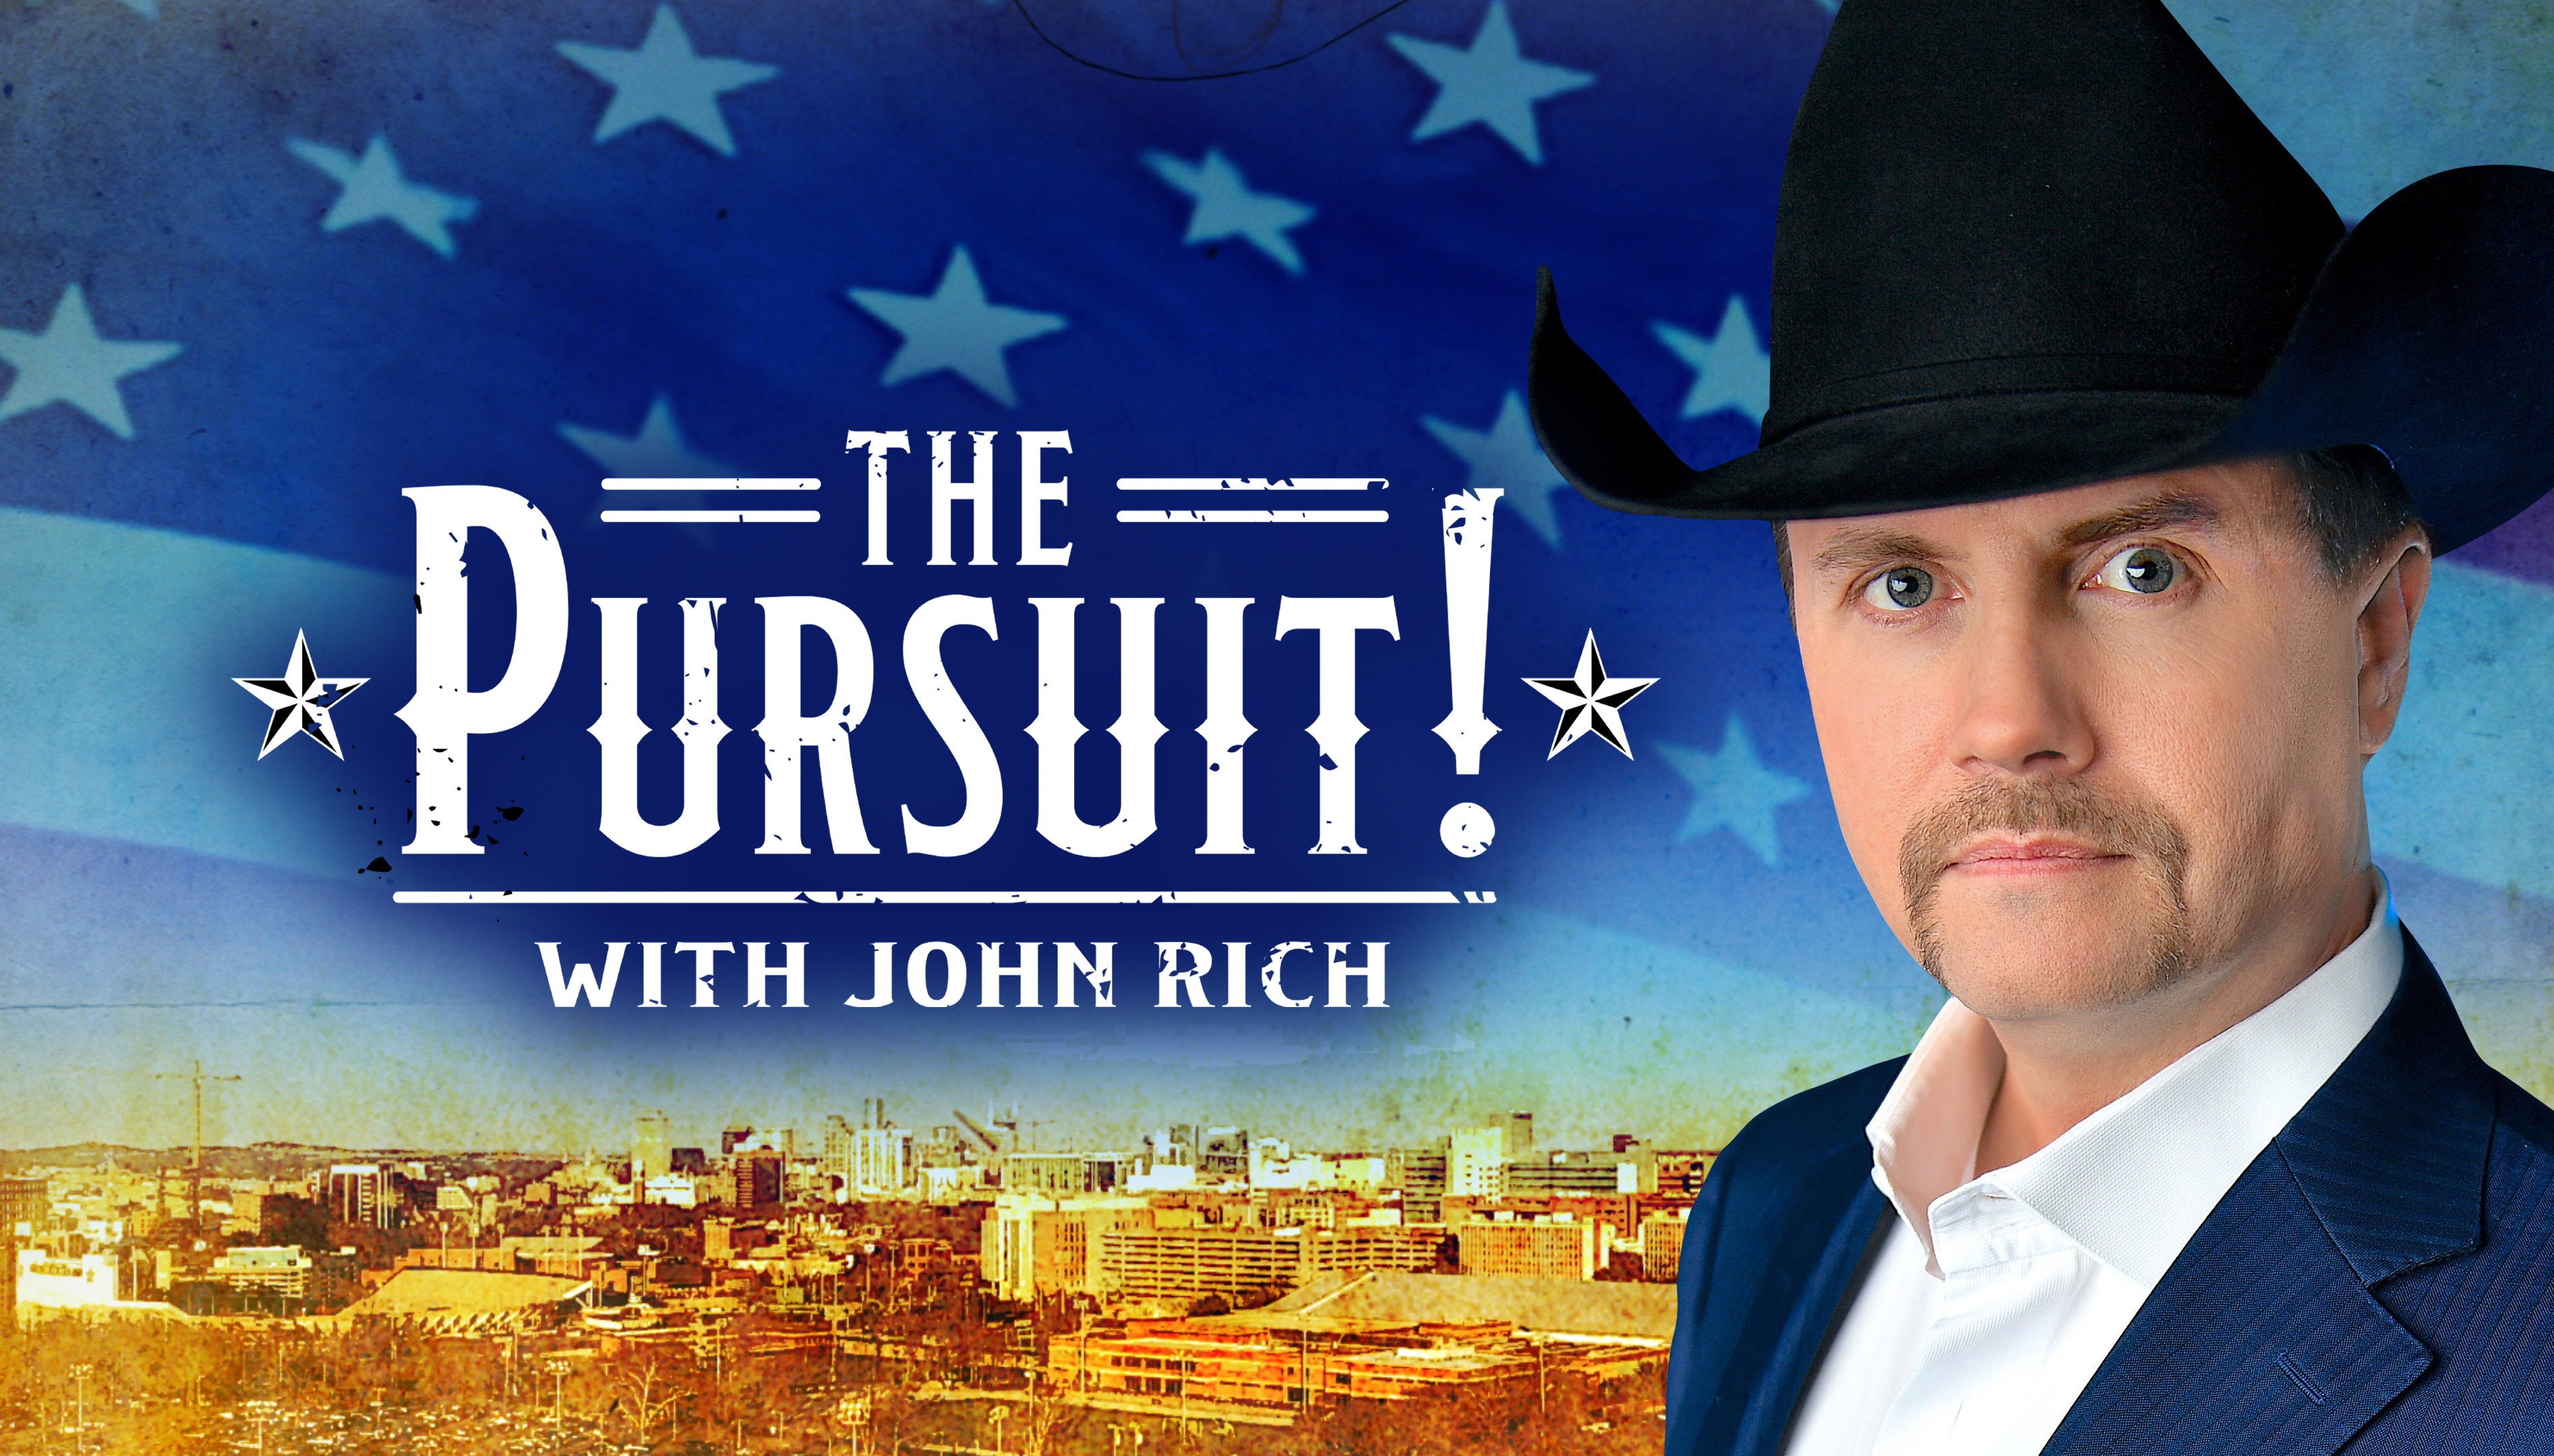 The Pursuit! with John Rich